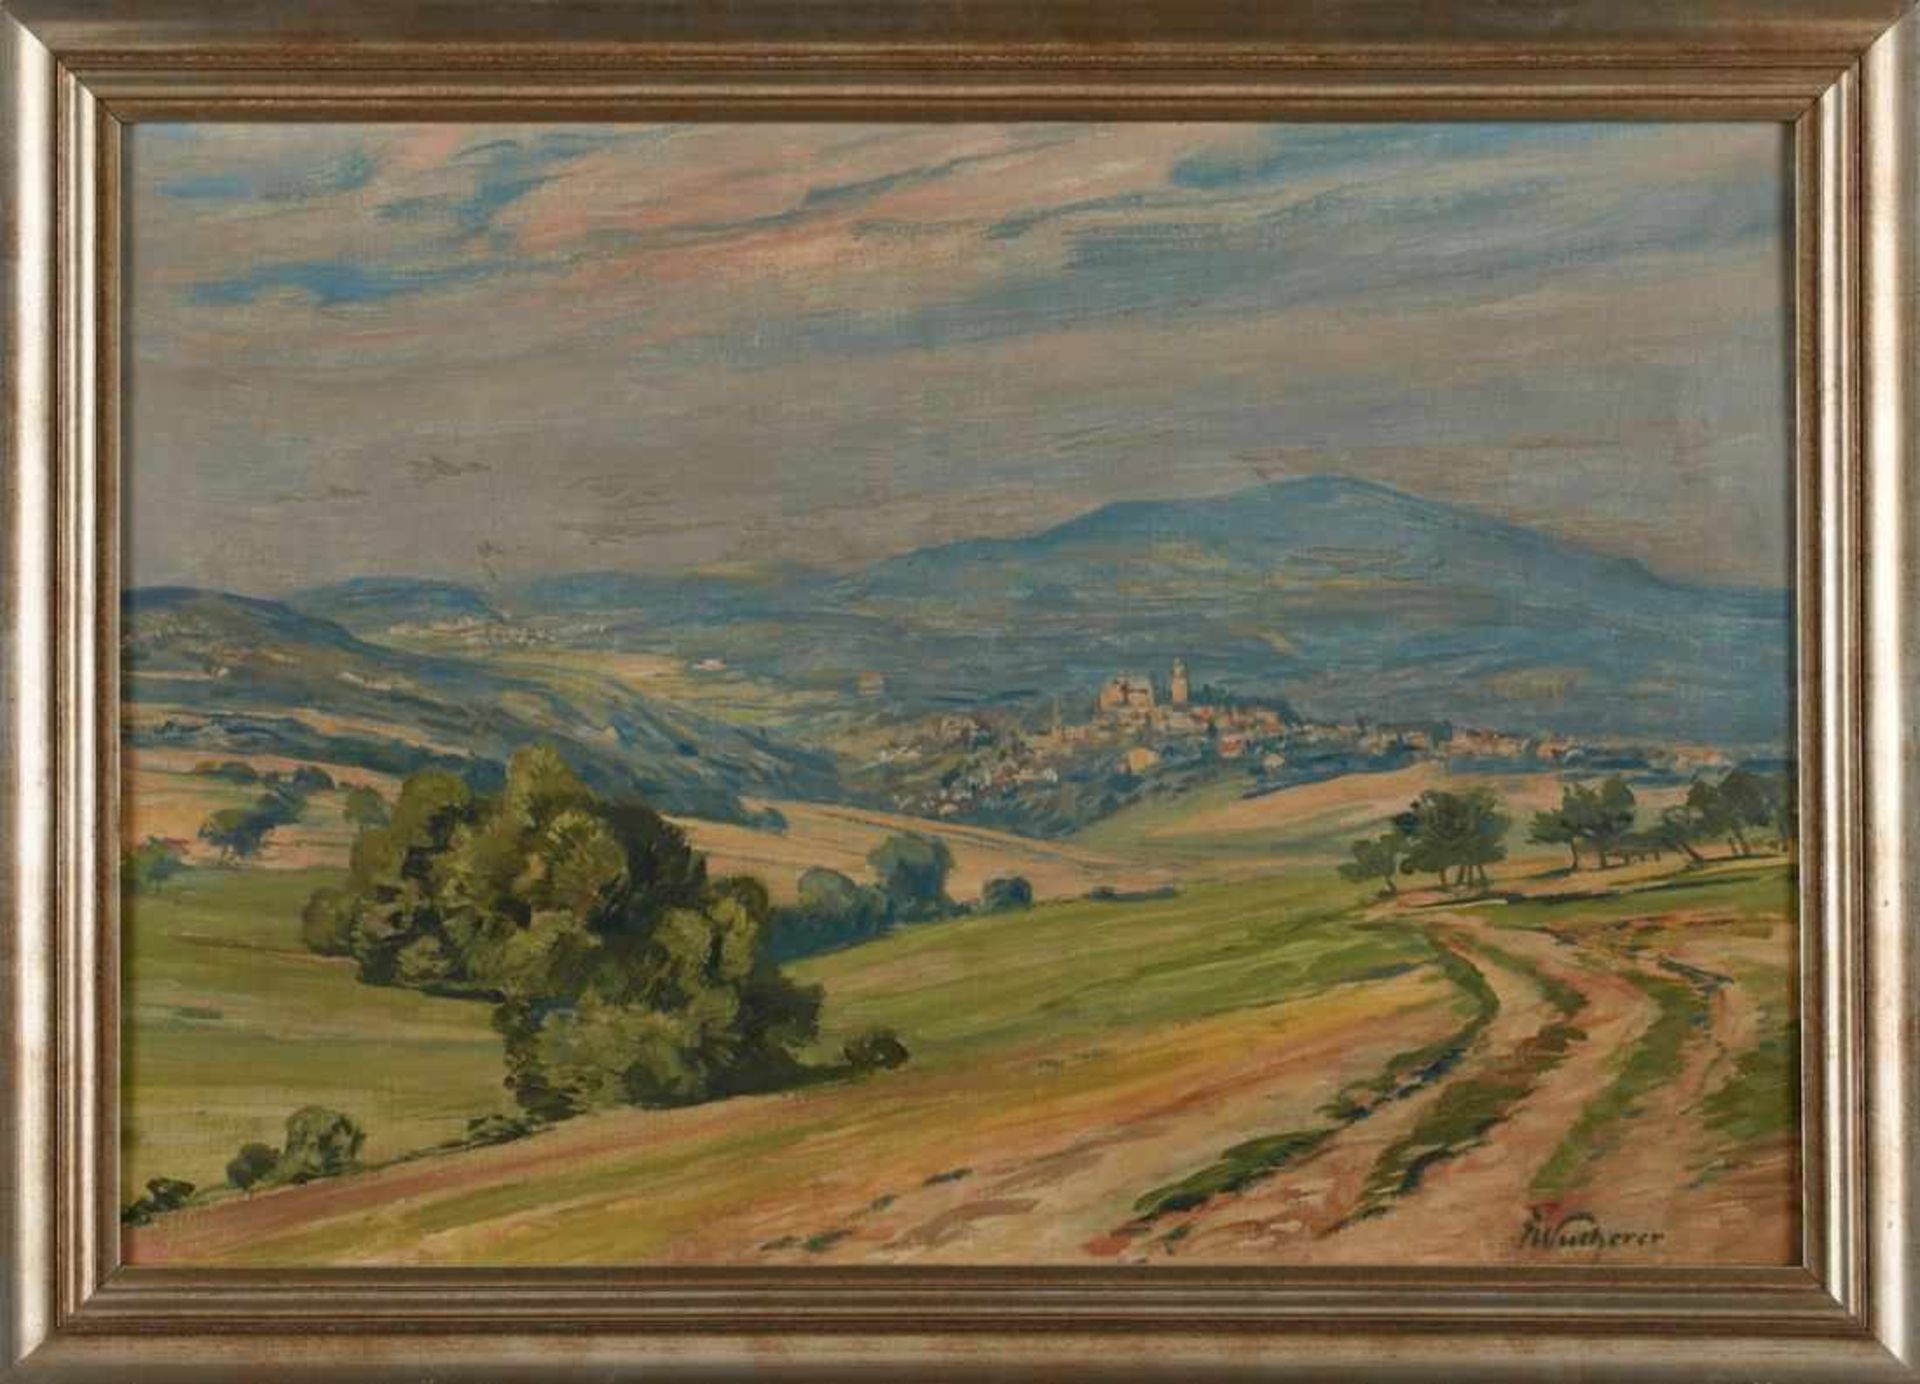 Gemälde Fritz Wucherer 1873 Basel - 1948 Kronberg "Kronberg im Taunus" u. re sign. F. Wucherer Öl/